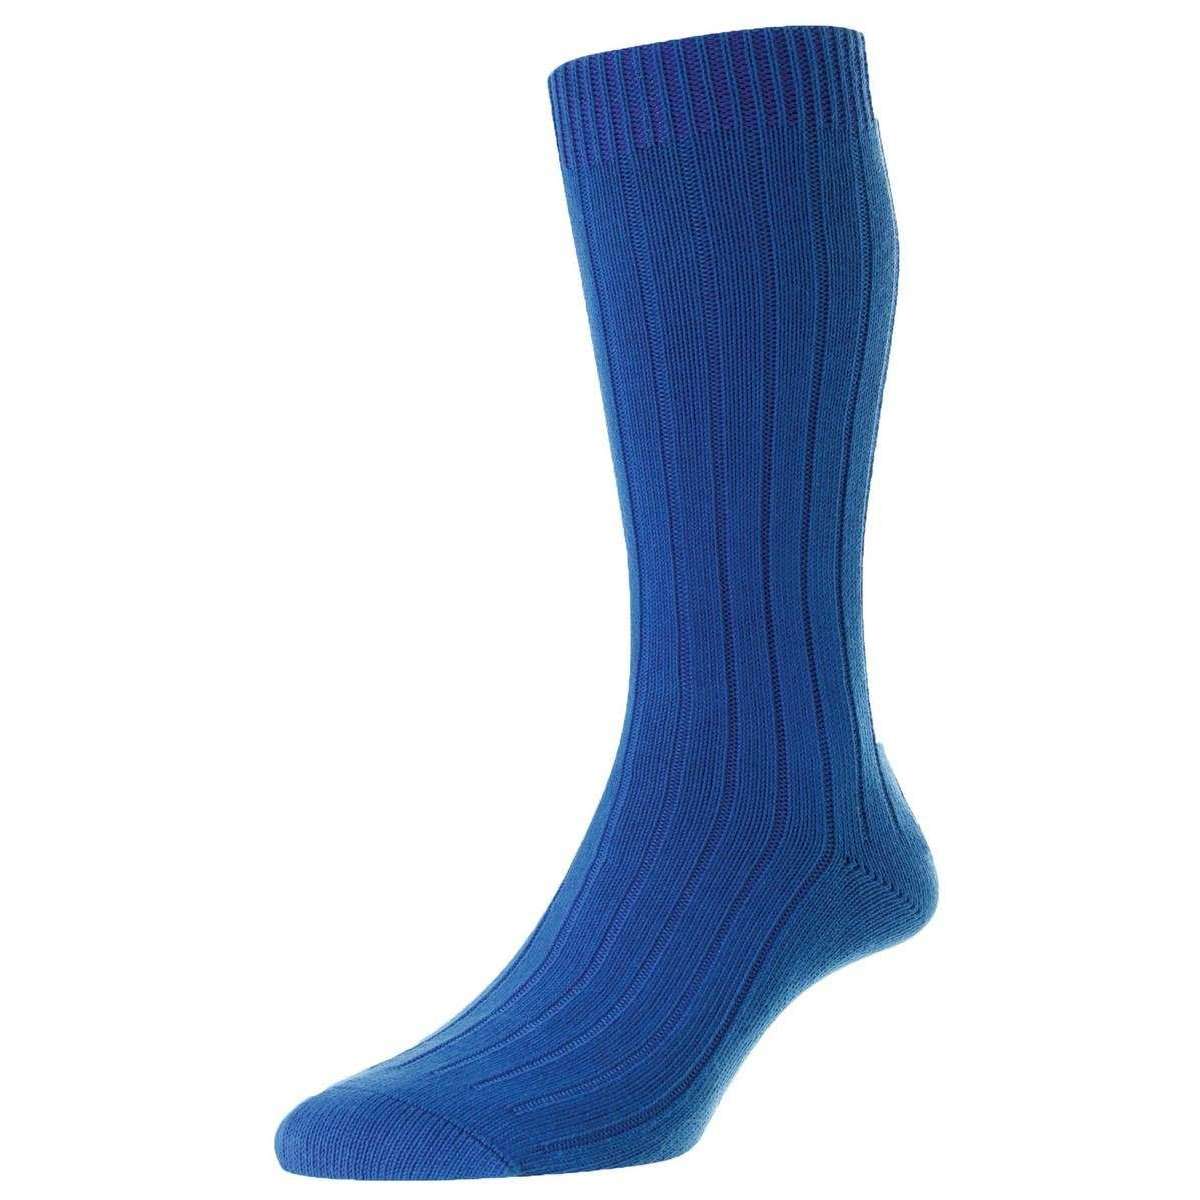 Pantherella Seaford Organic Cotton Socks - Bright Blue